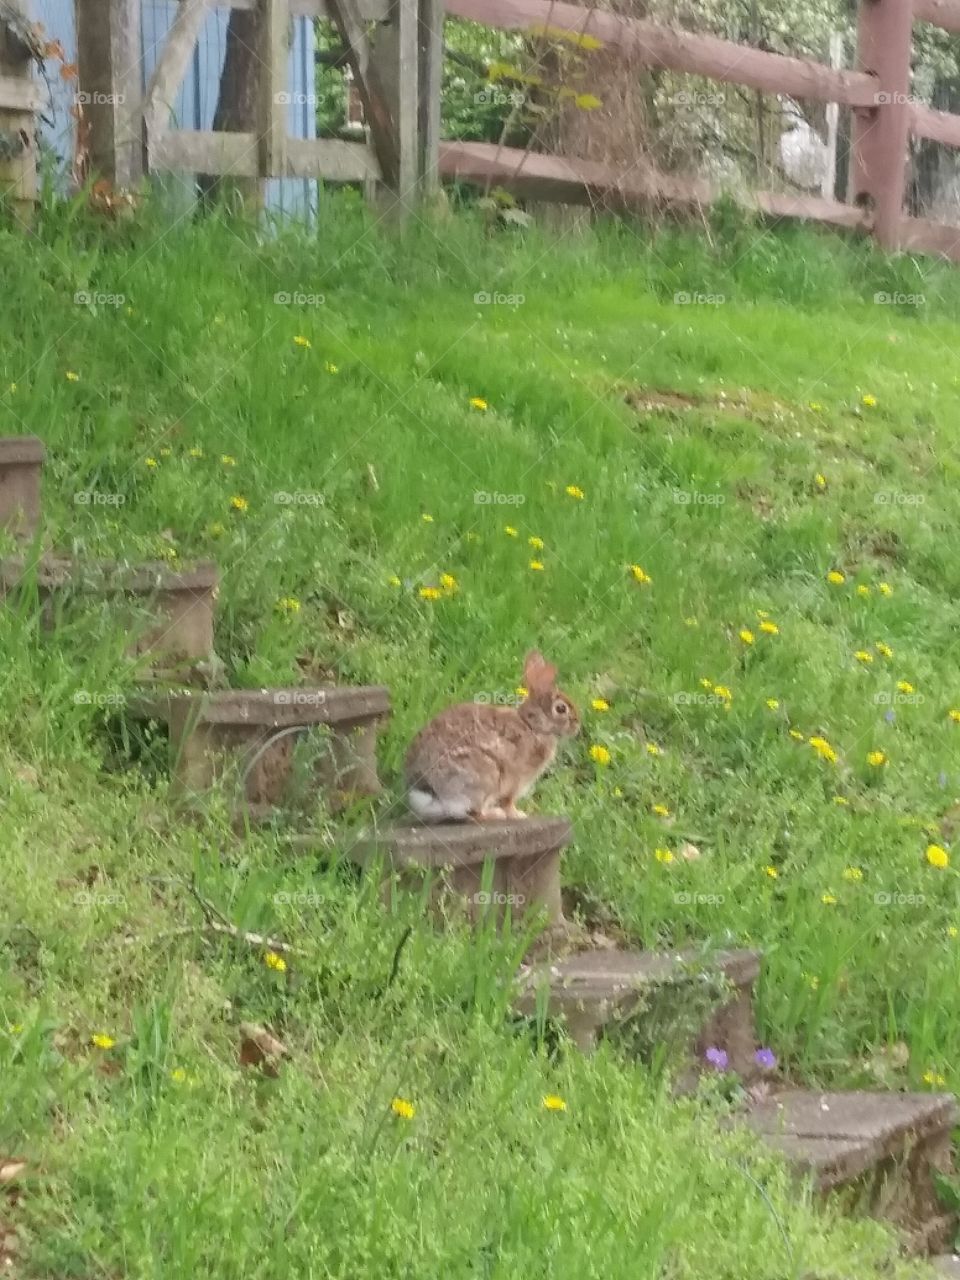 saw a cutr bunny while walking home